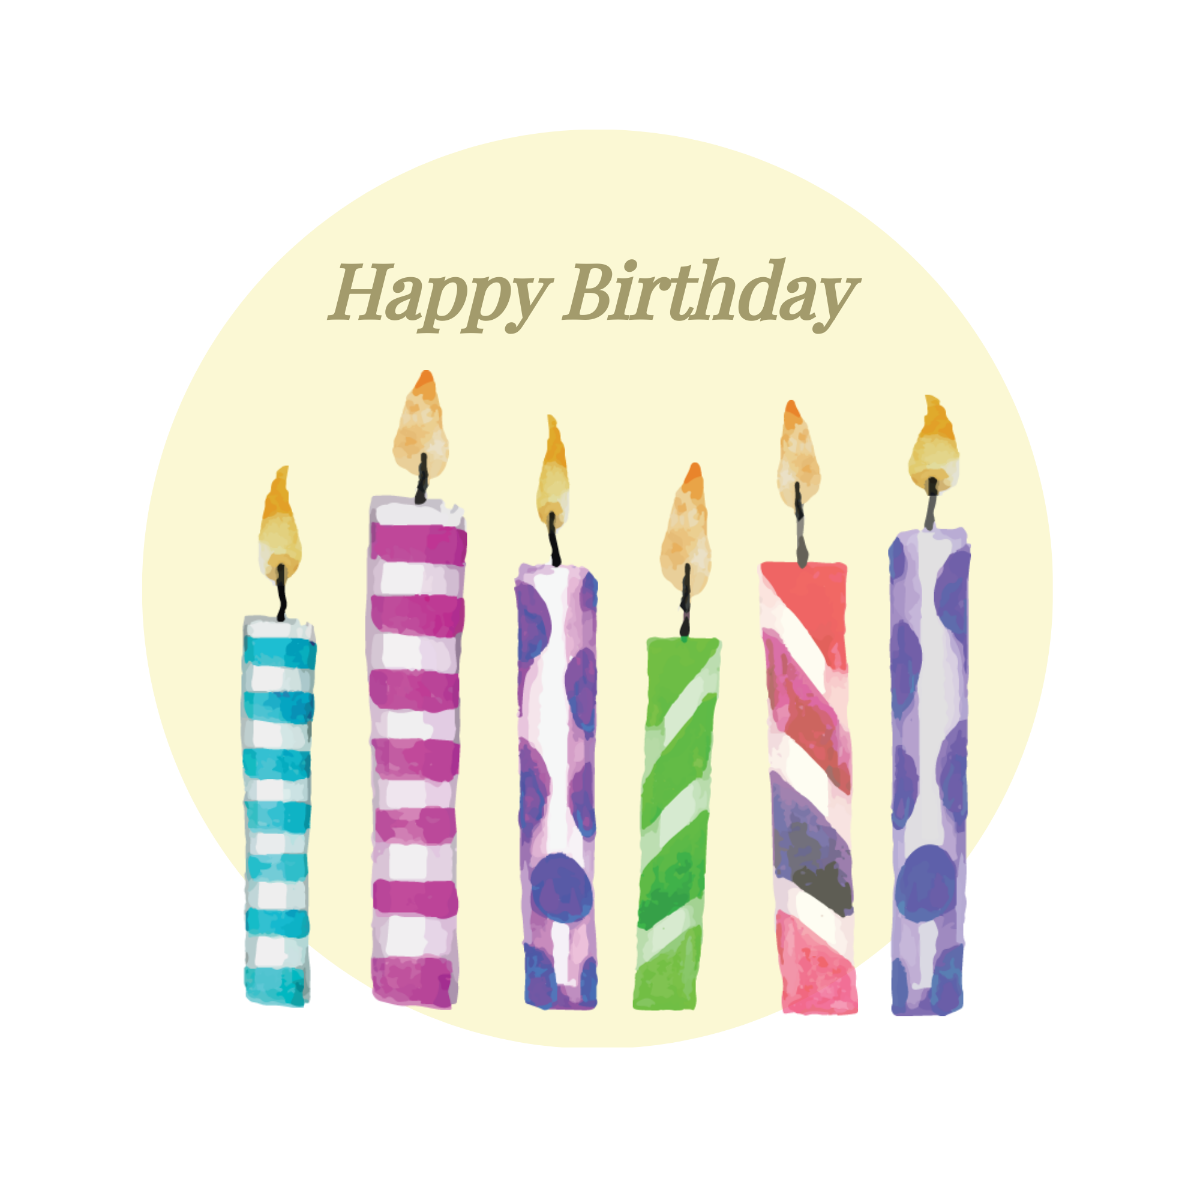 Watercolor Happy Birthday Candle Vector Template